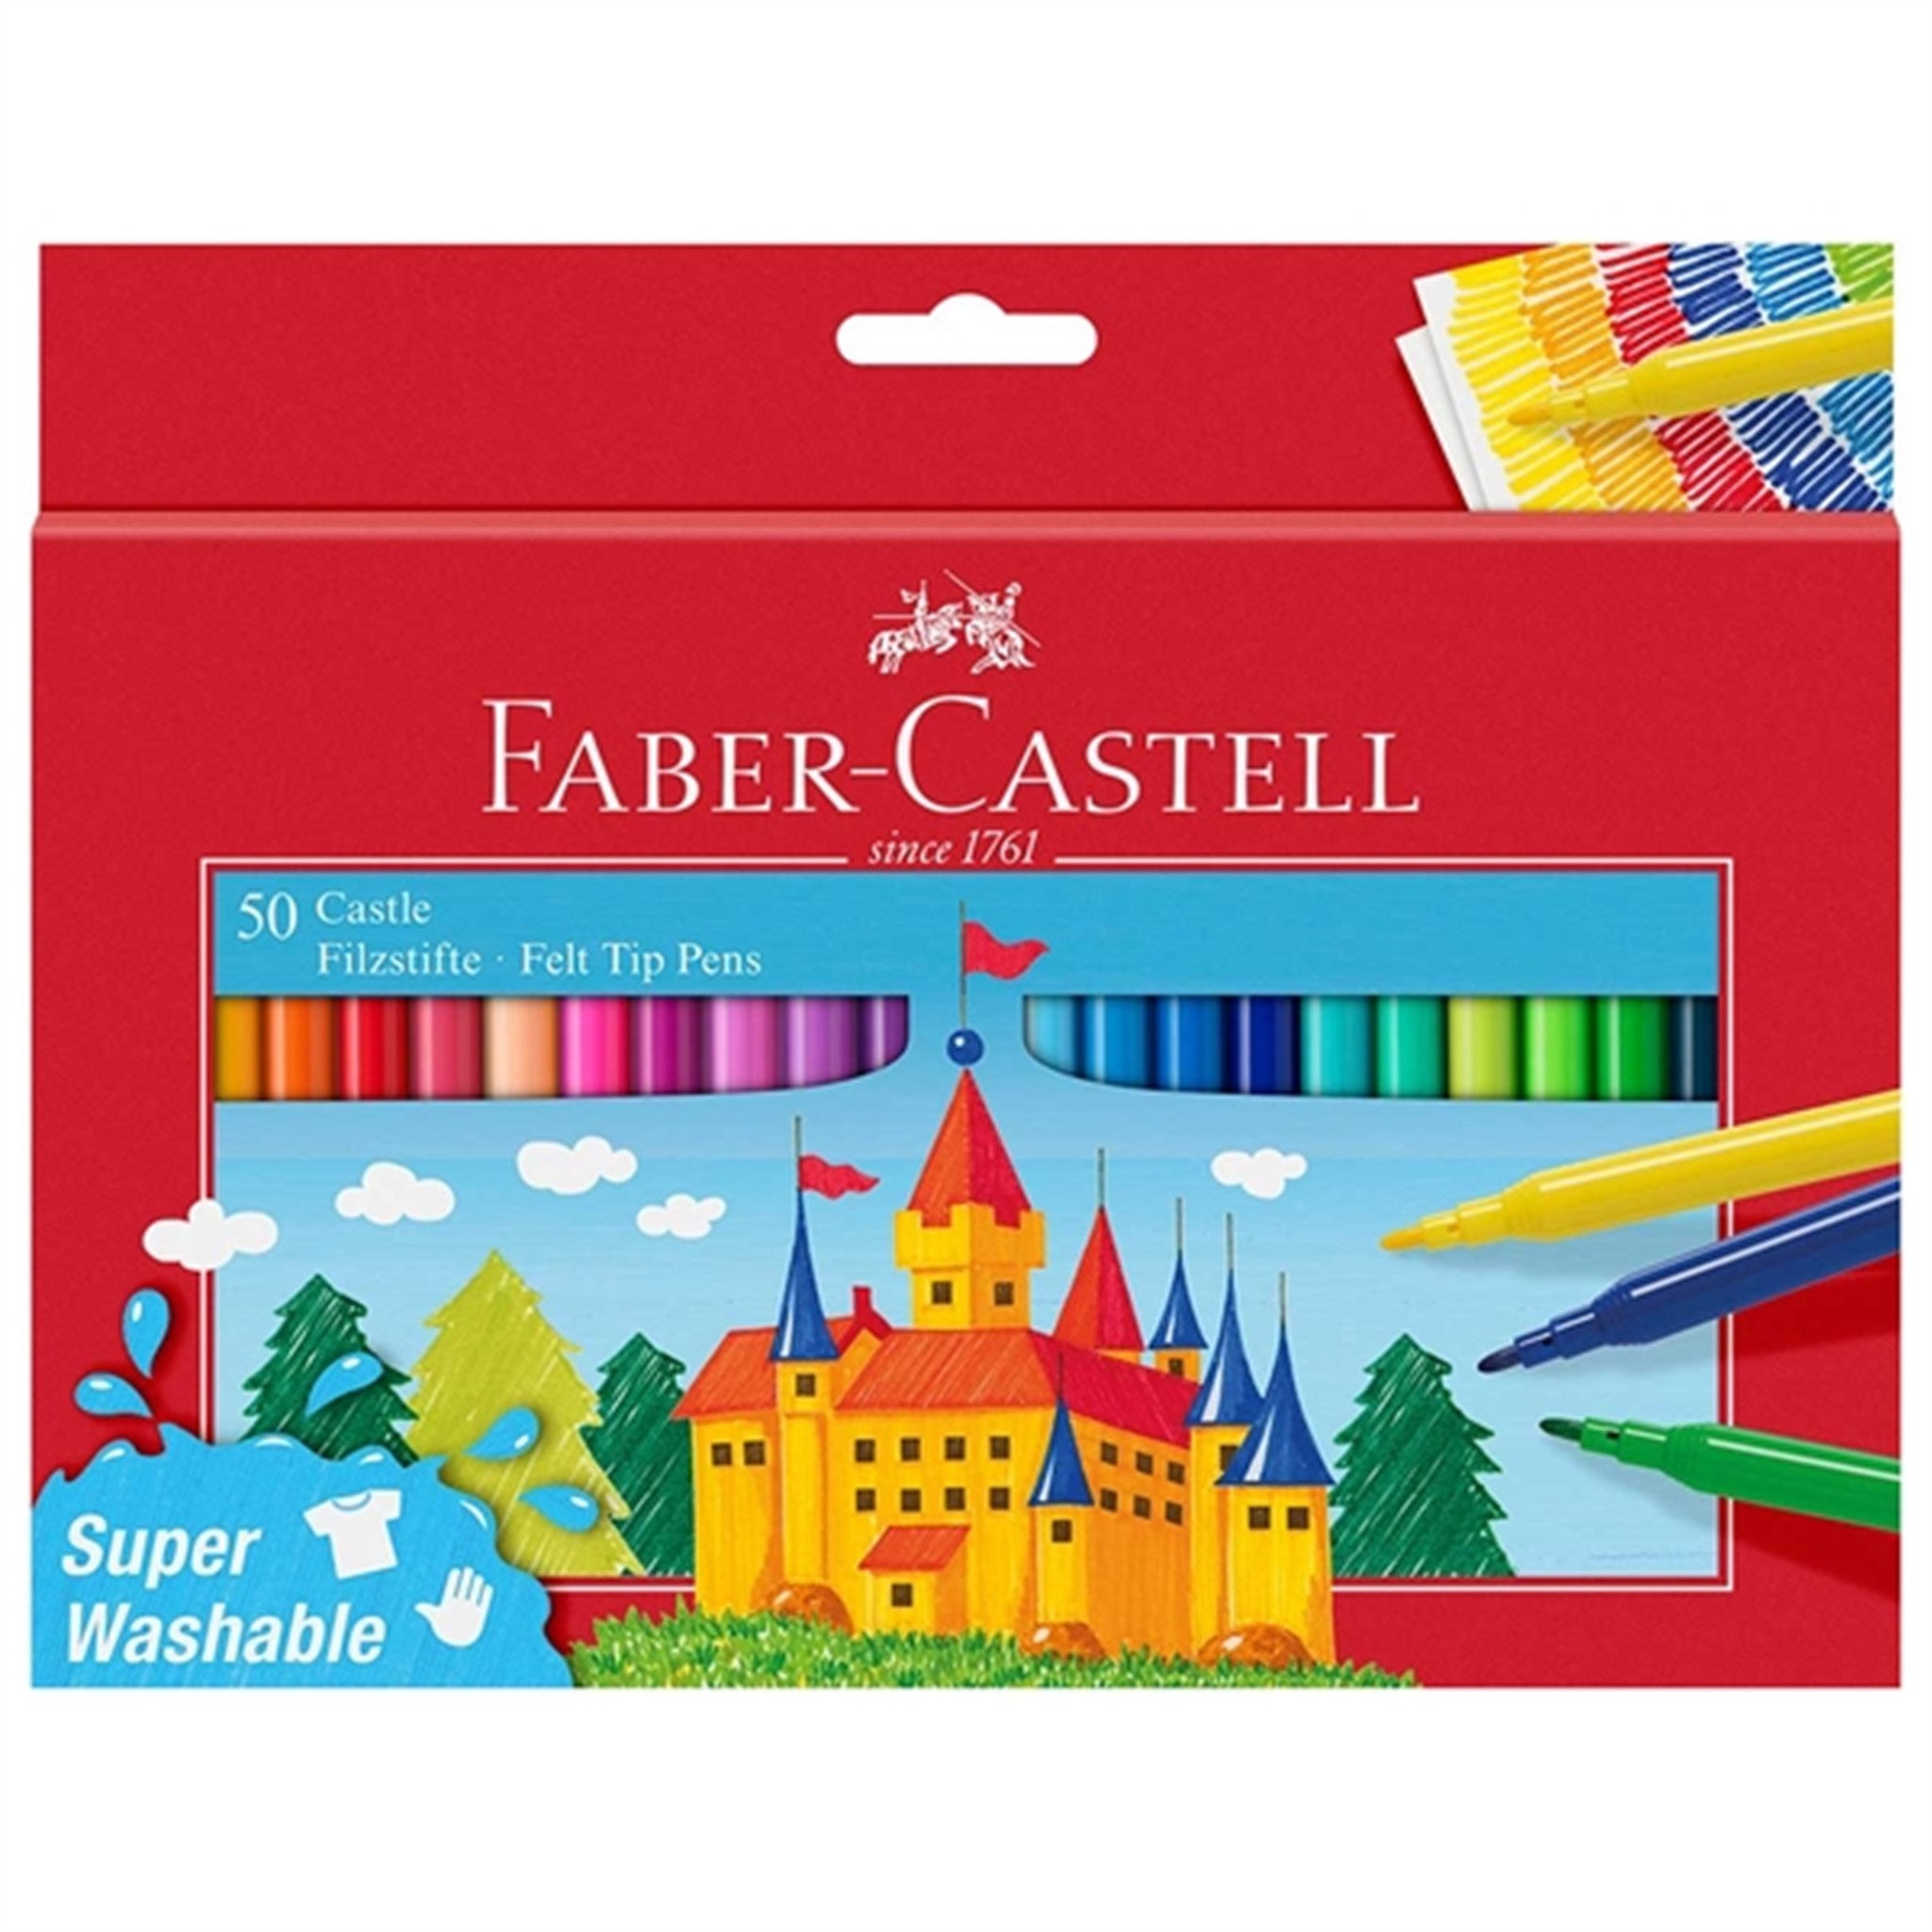 Faber Castell Castle 50 Felt Tip Pens